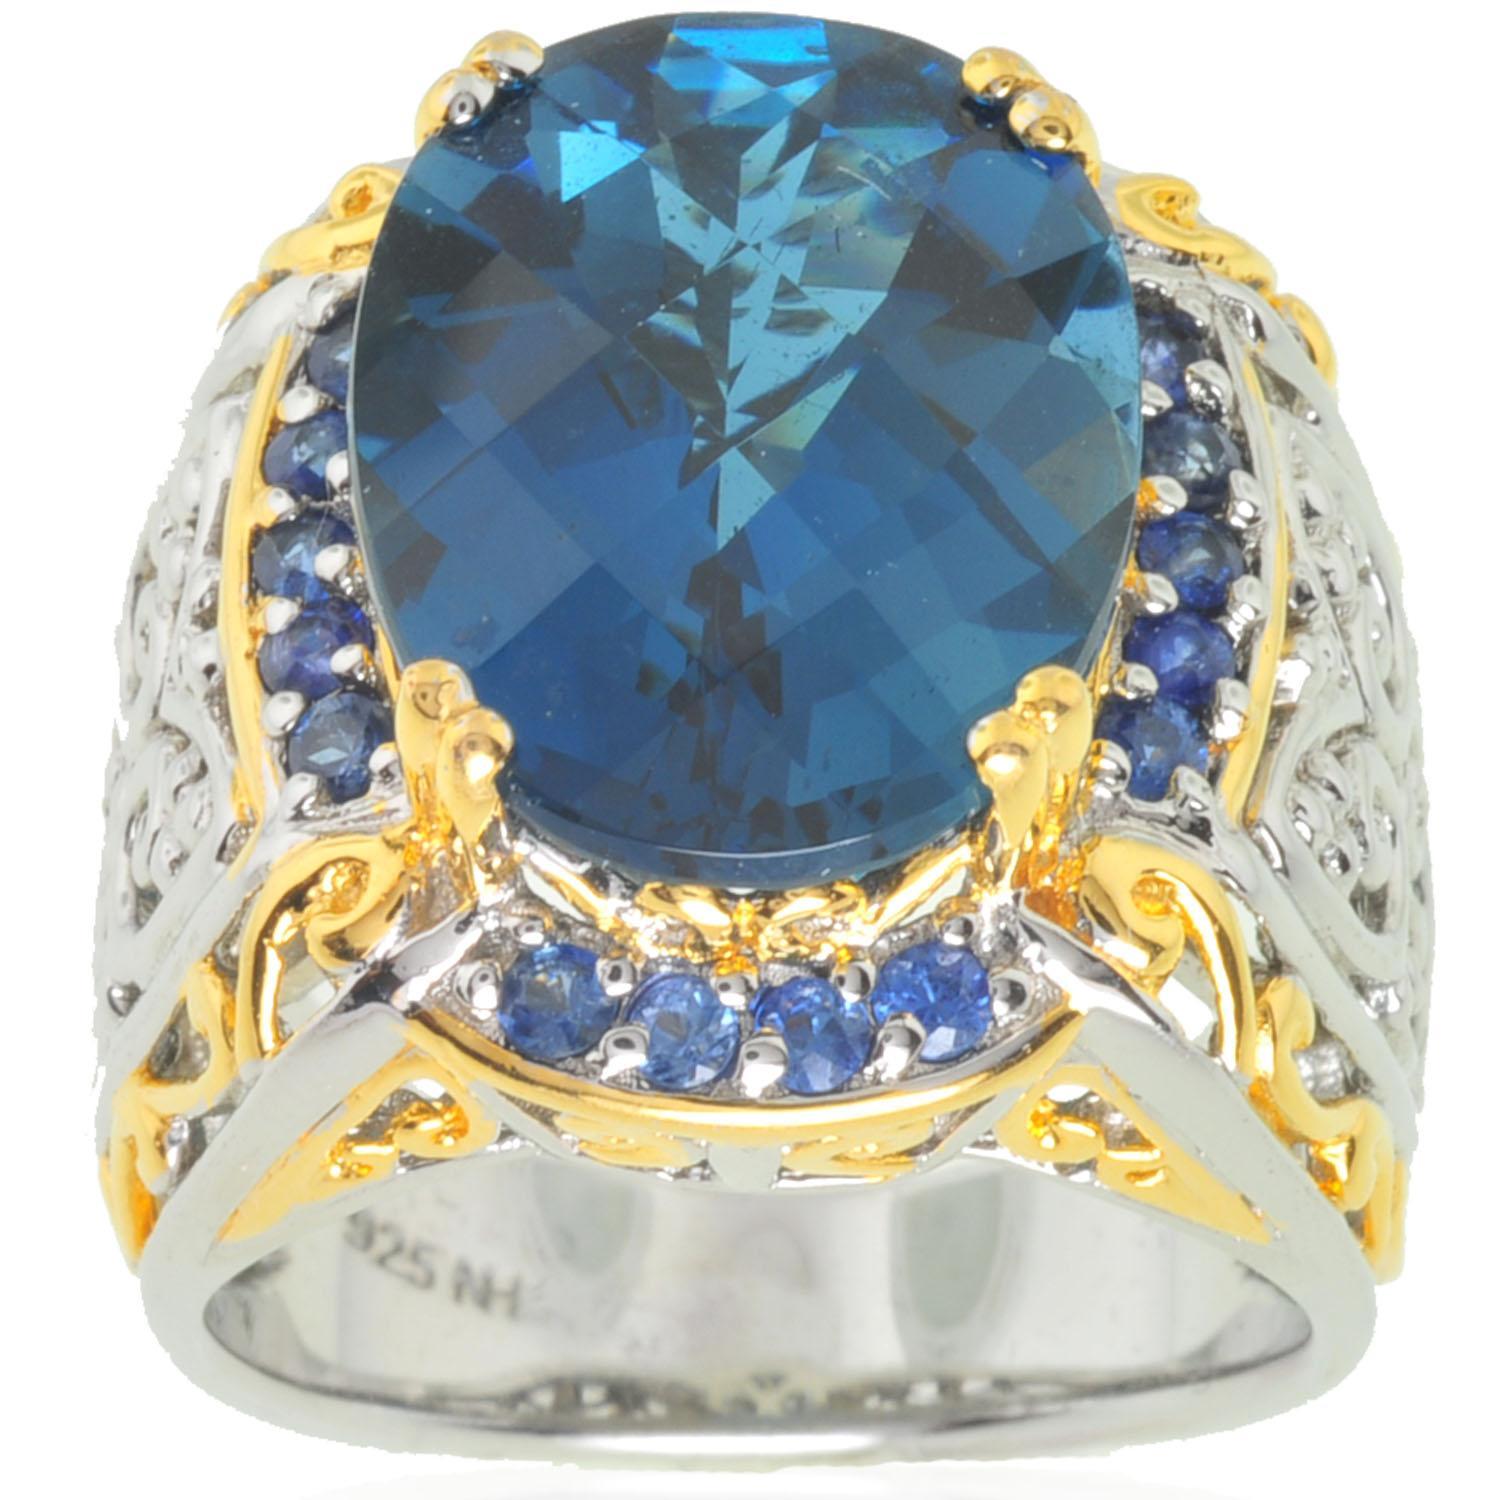   Silver/ 18k Vermeil London Blue Topaz/ Sapphire Ring  